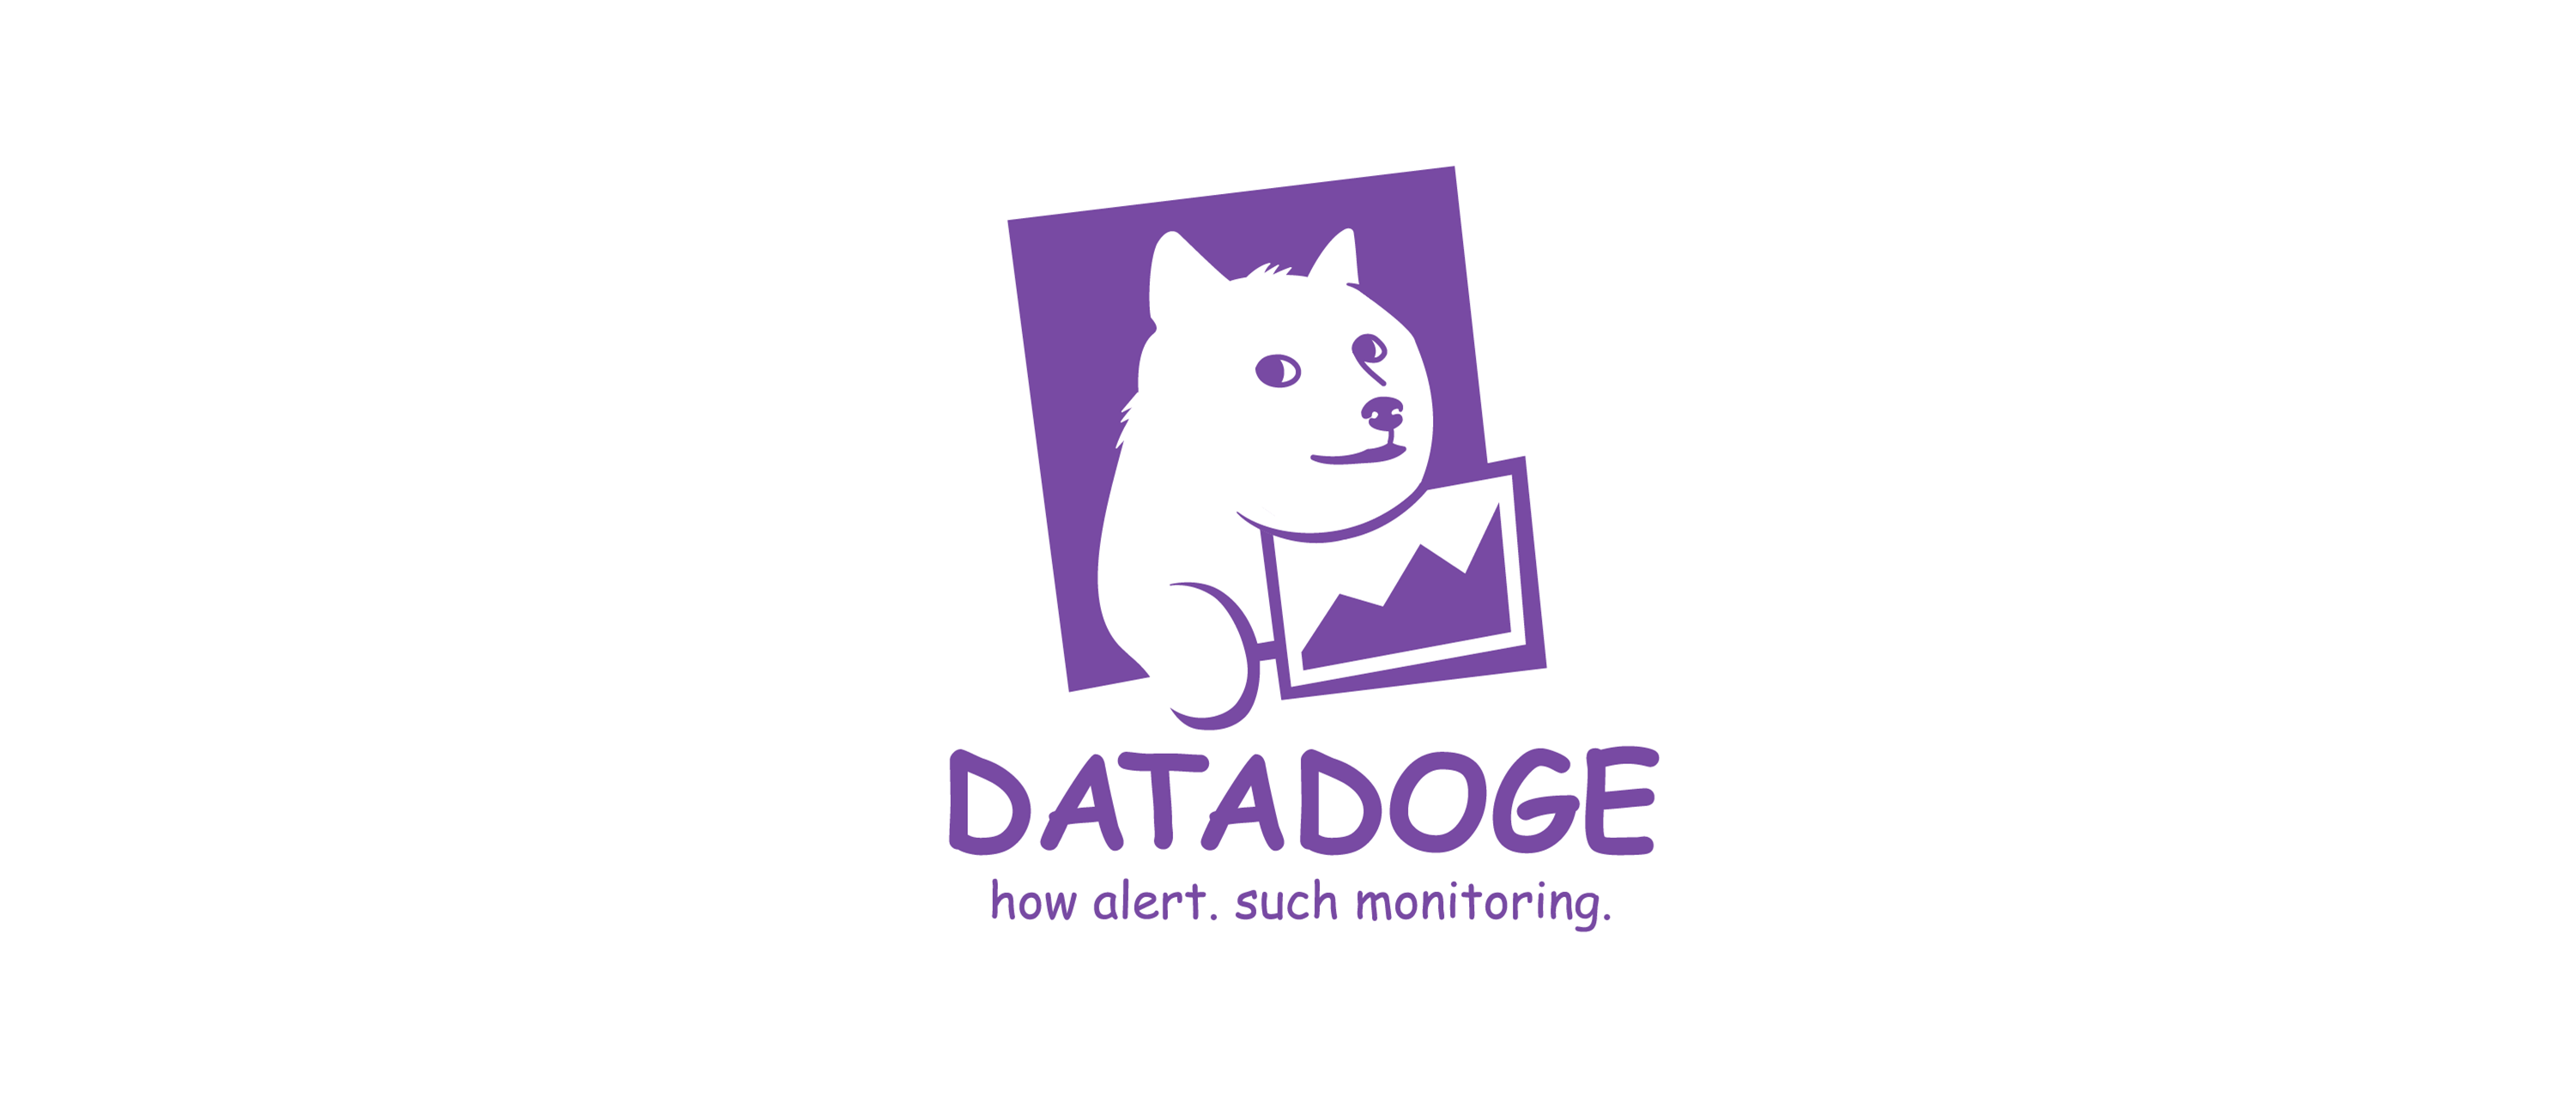 Datadog Logo - Datadog is now Datadoge